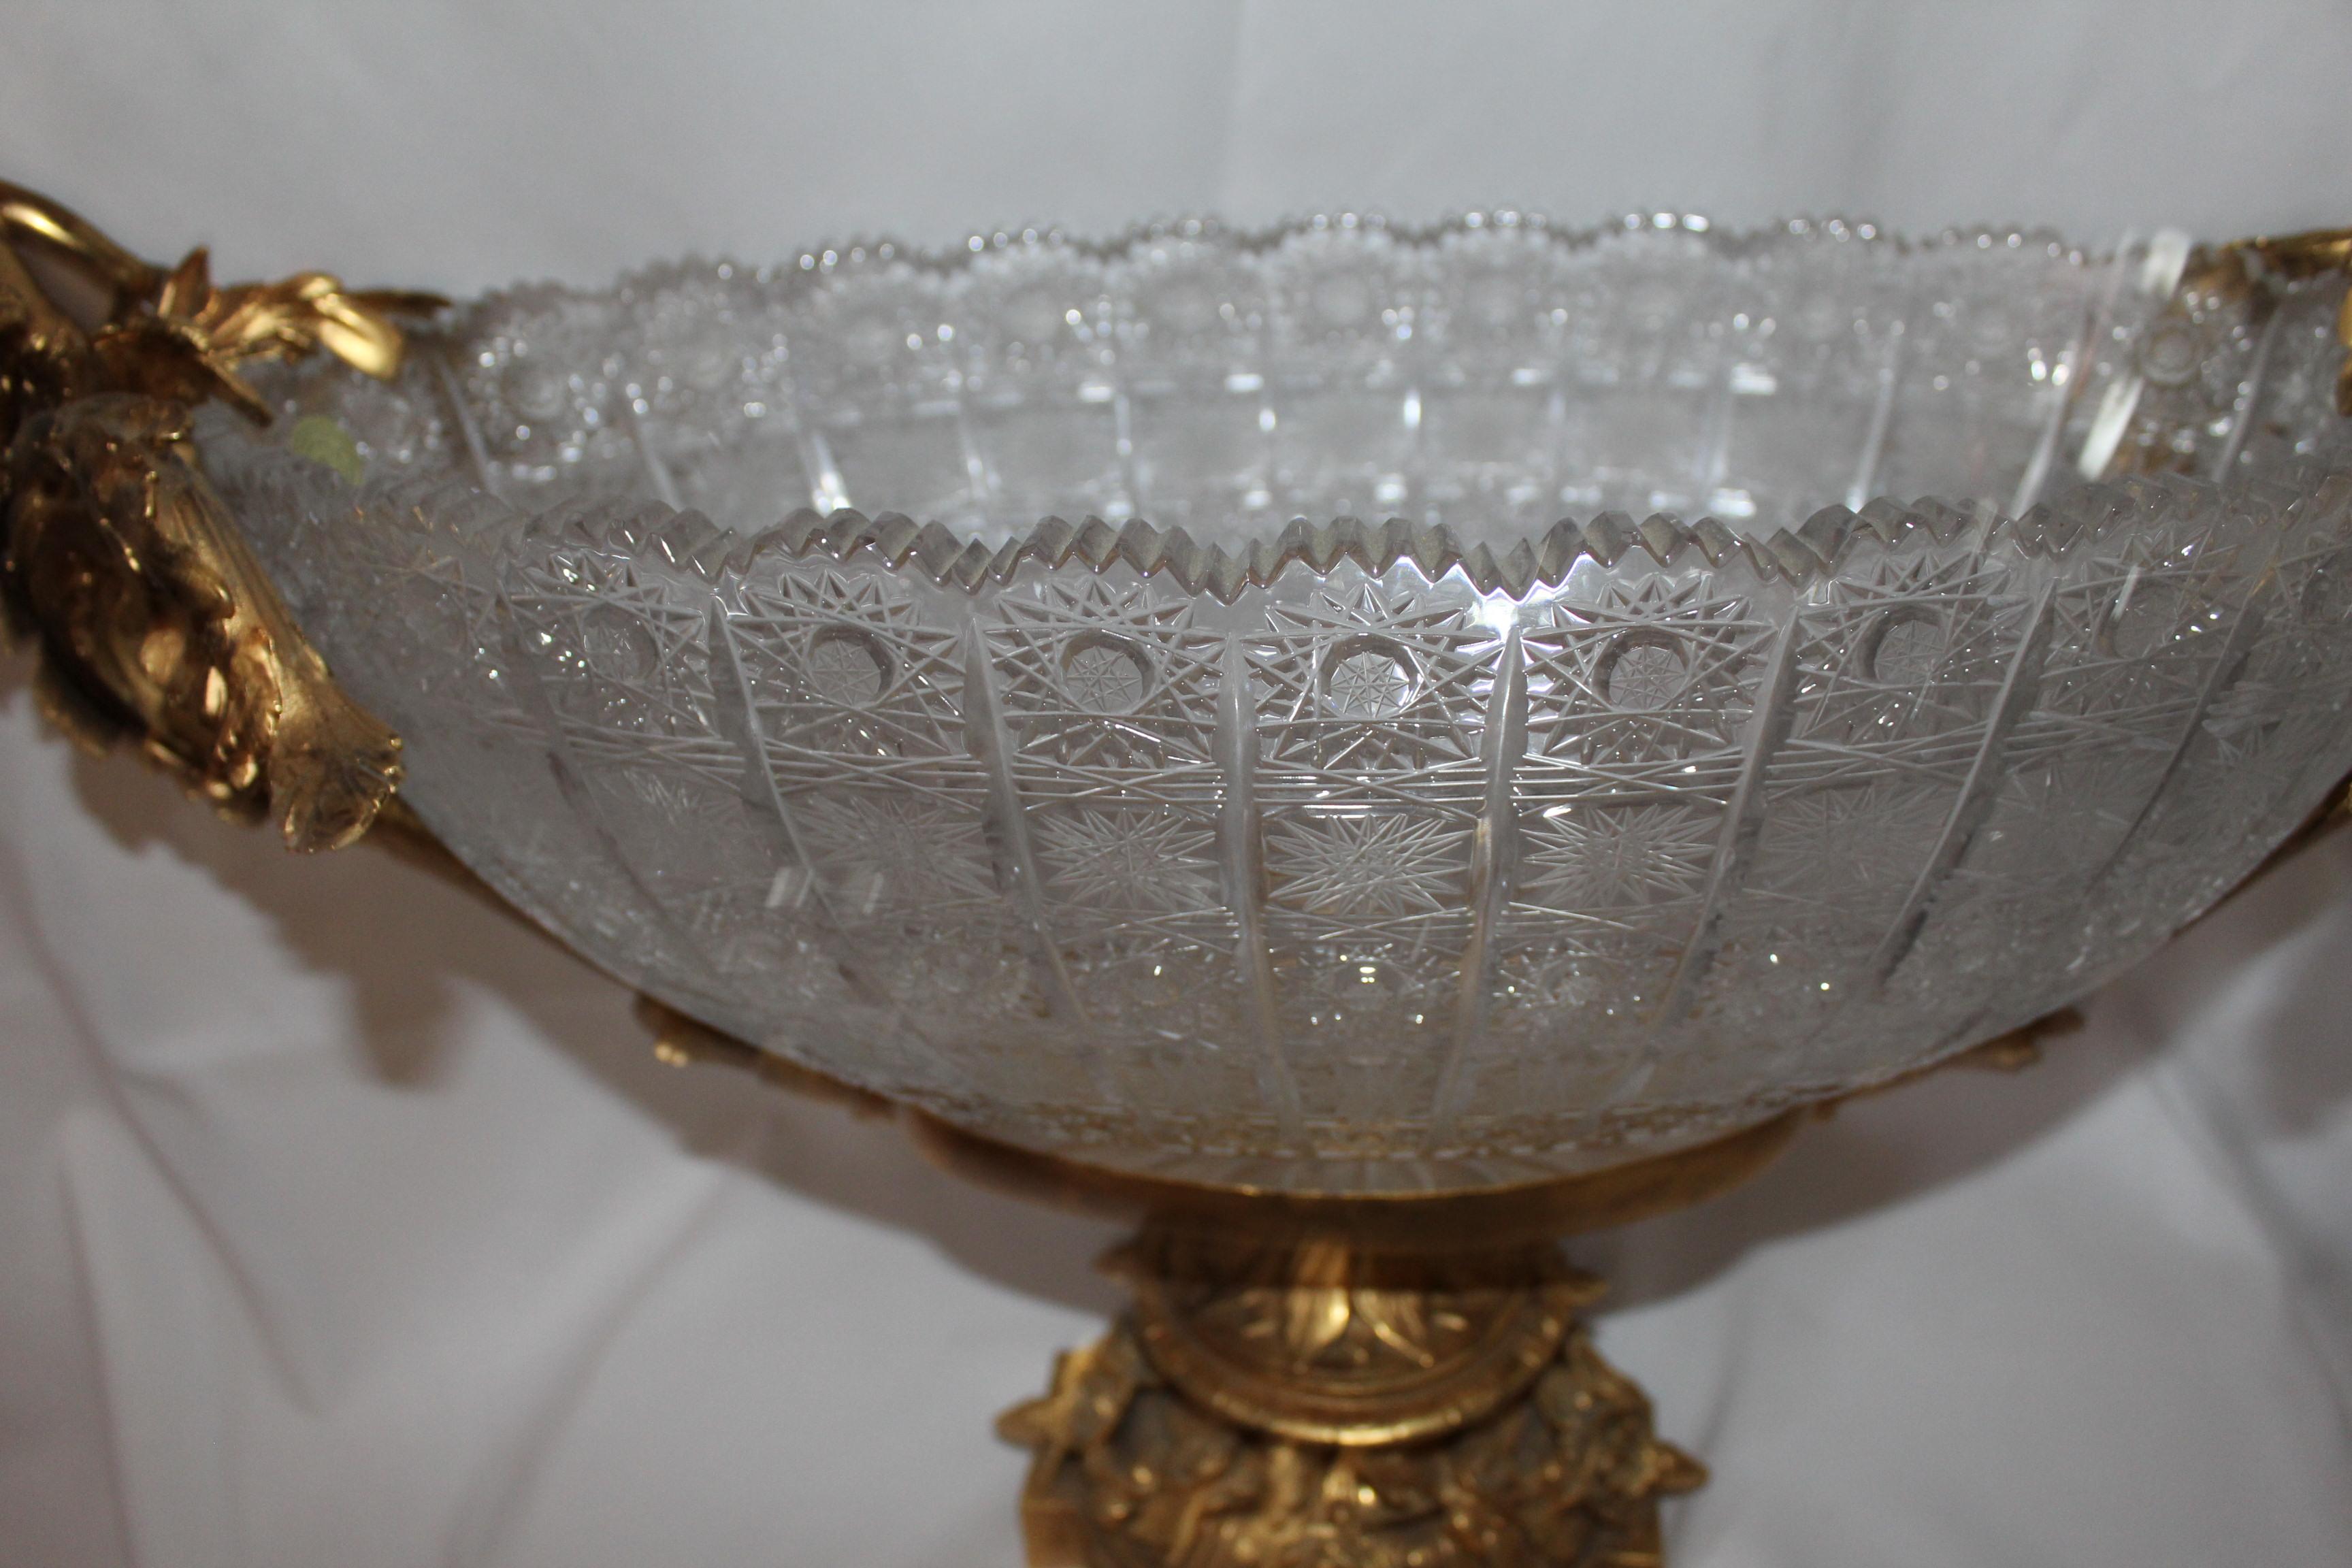 Carved Crystal Bowl, Center Piece, Doré 22-Karat Gold Plate on Bronze Empire Style